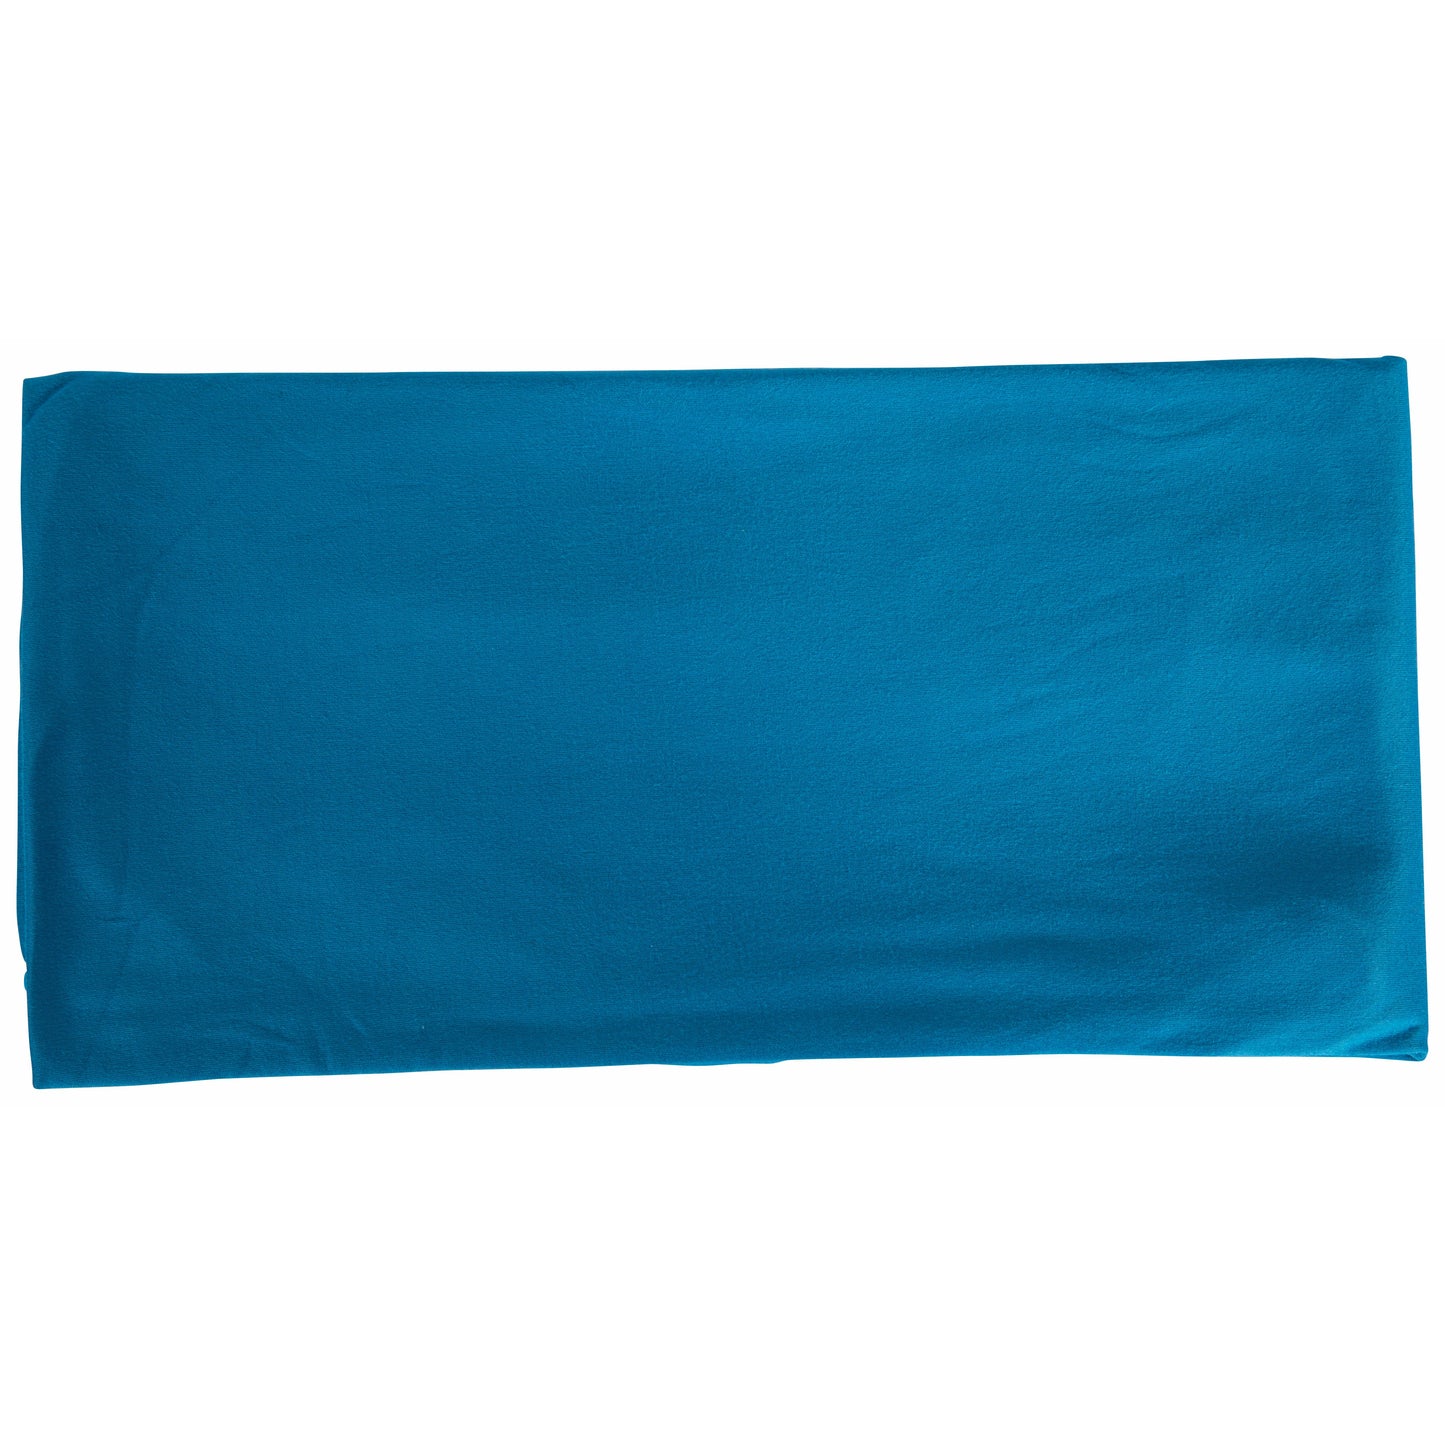 Compatto - Quick Dry Microfiber Towel 60 X 120Cm - Blue